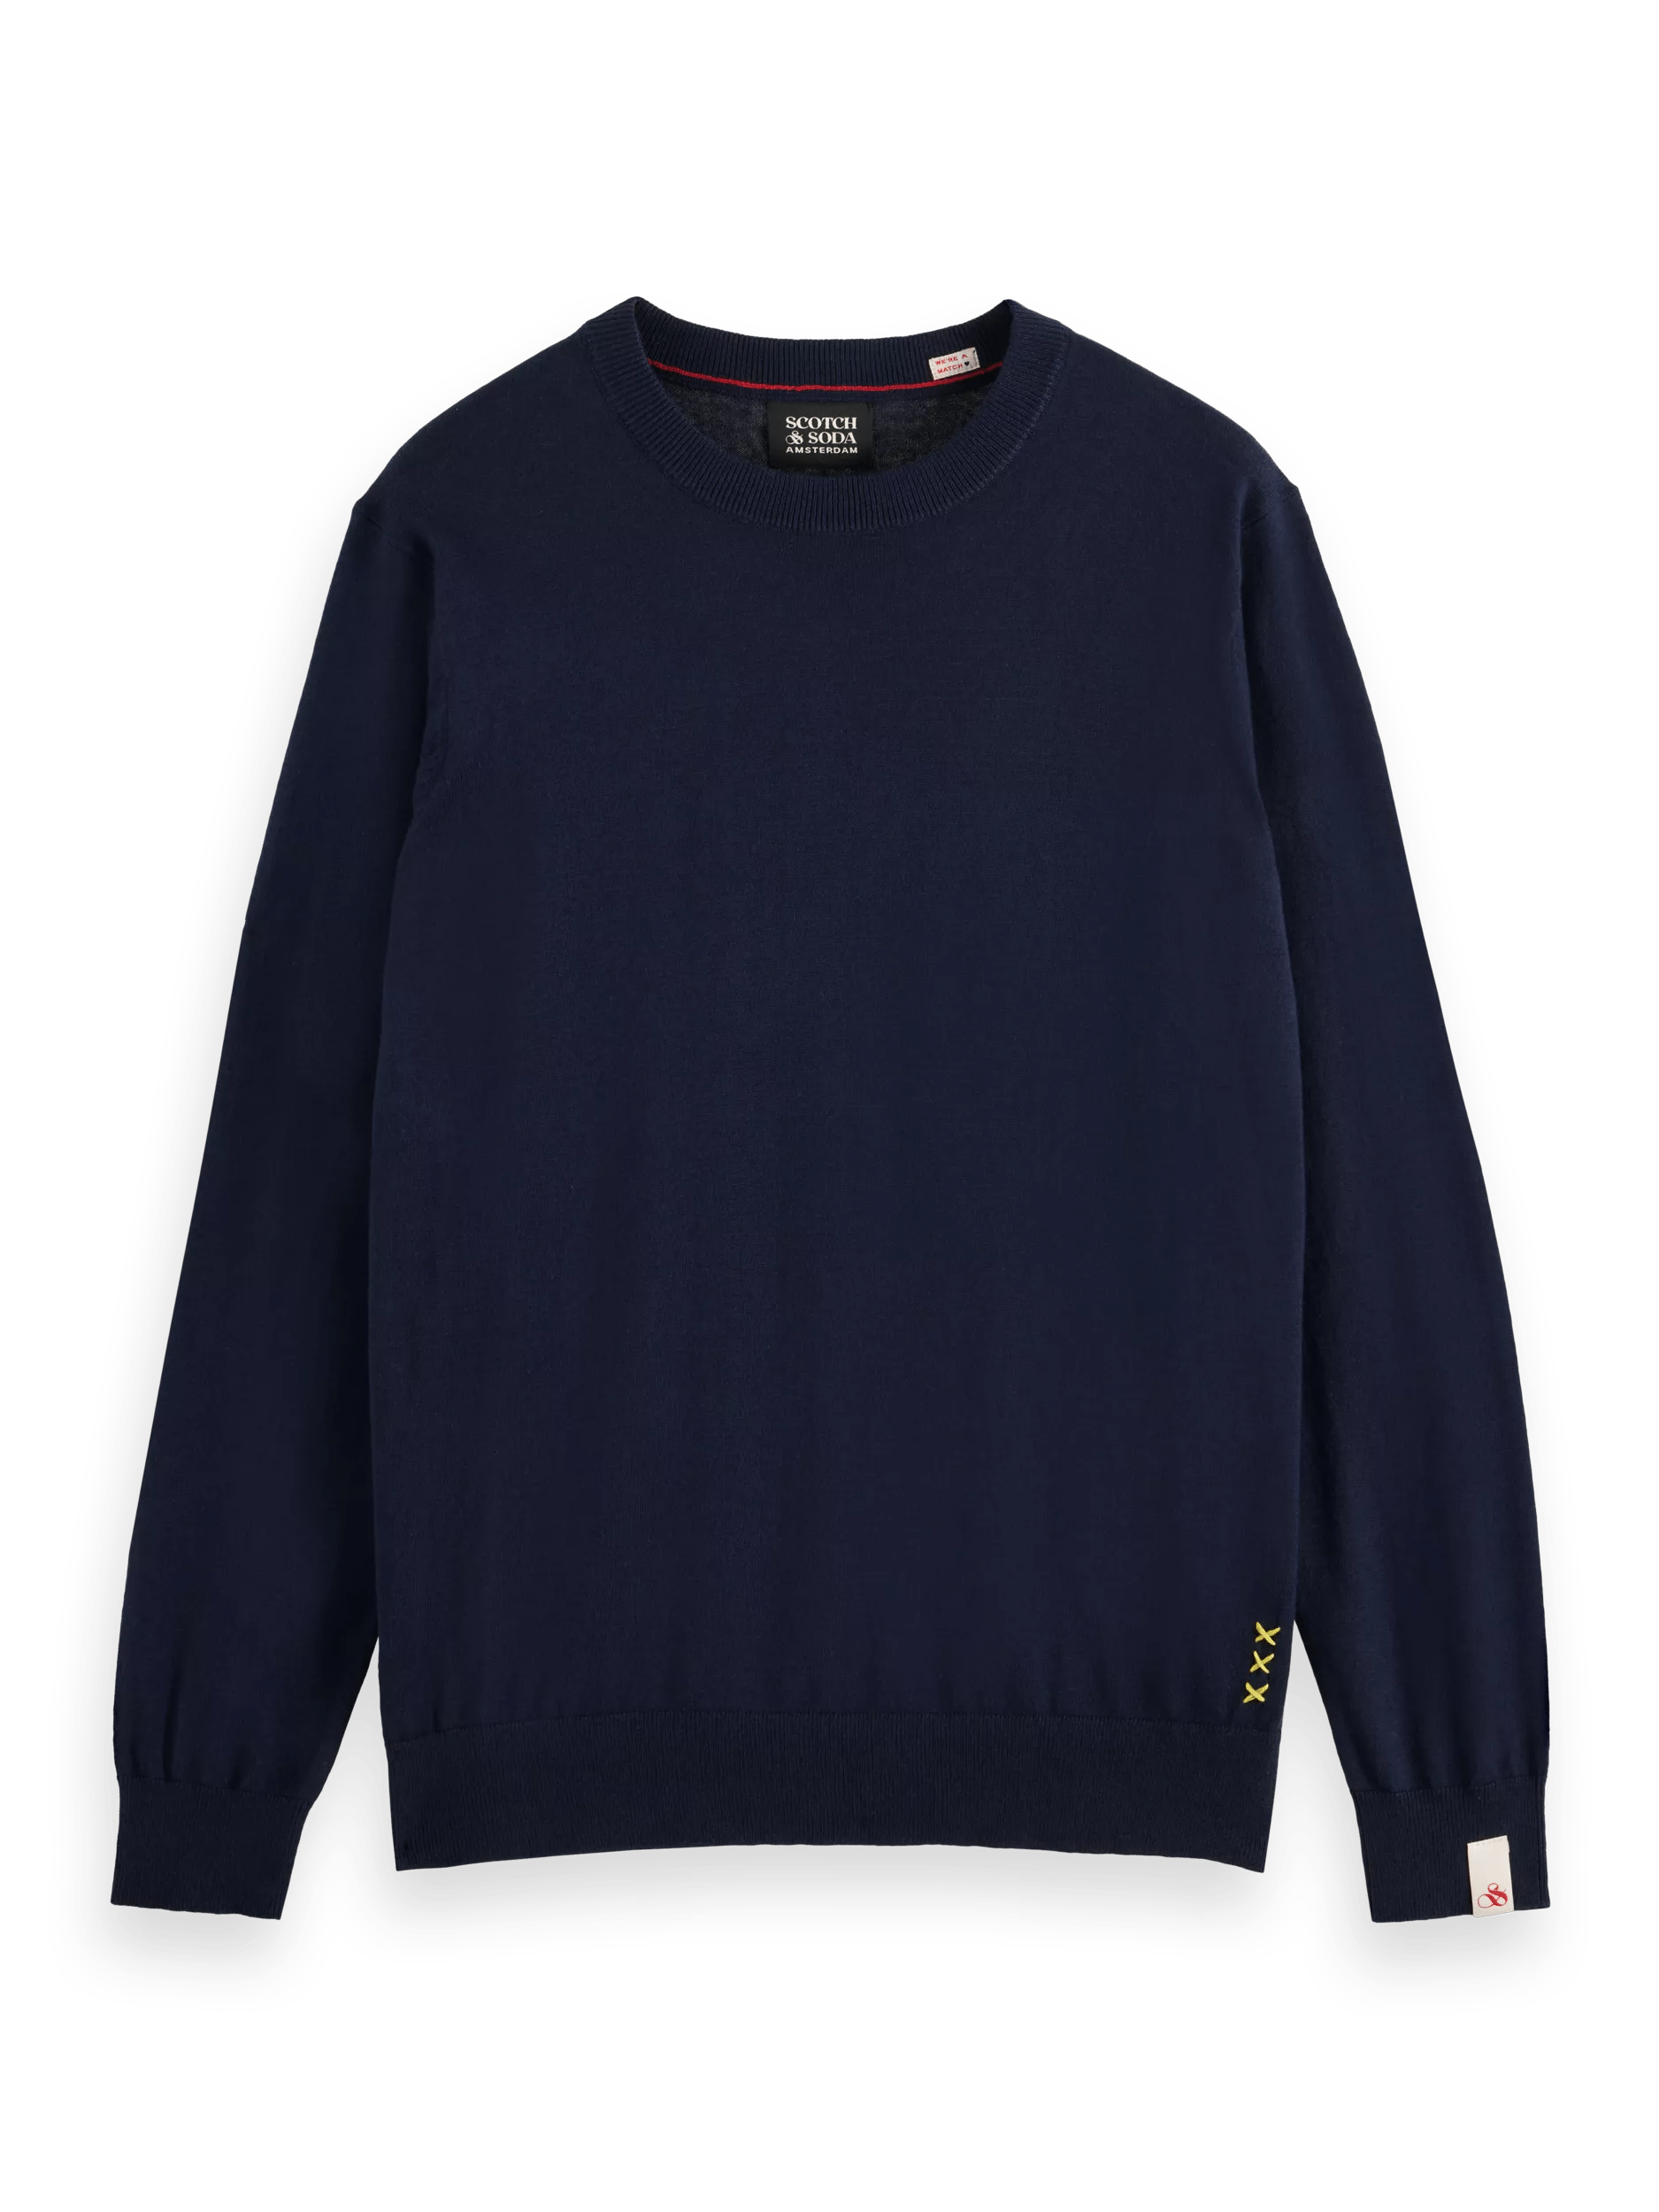 Scotch & Soda Linen-blended pullover sweater FNT